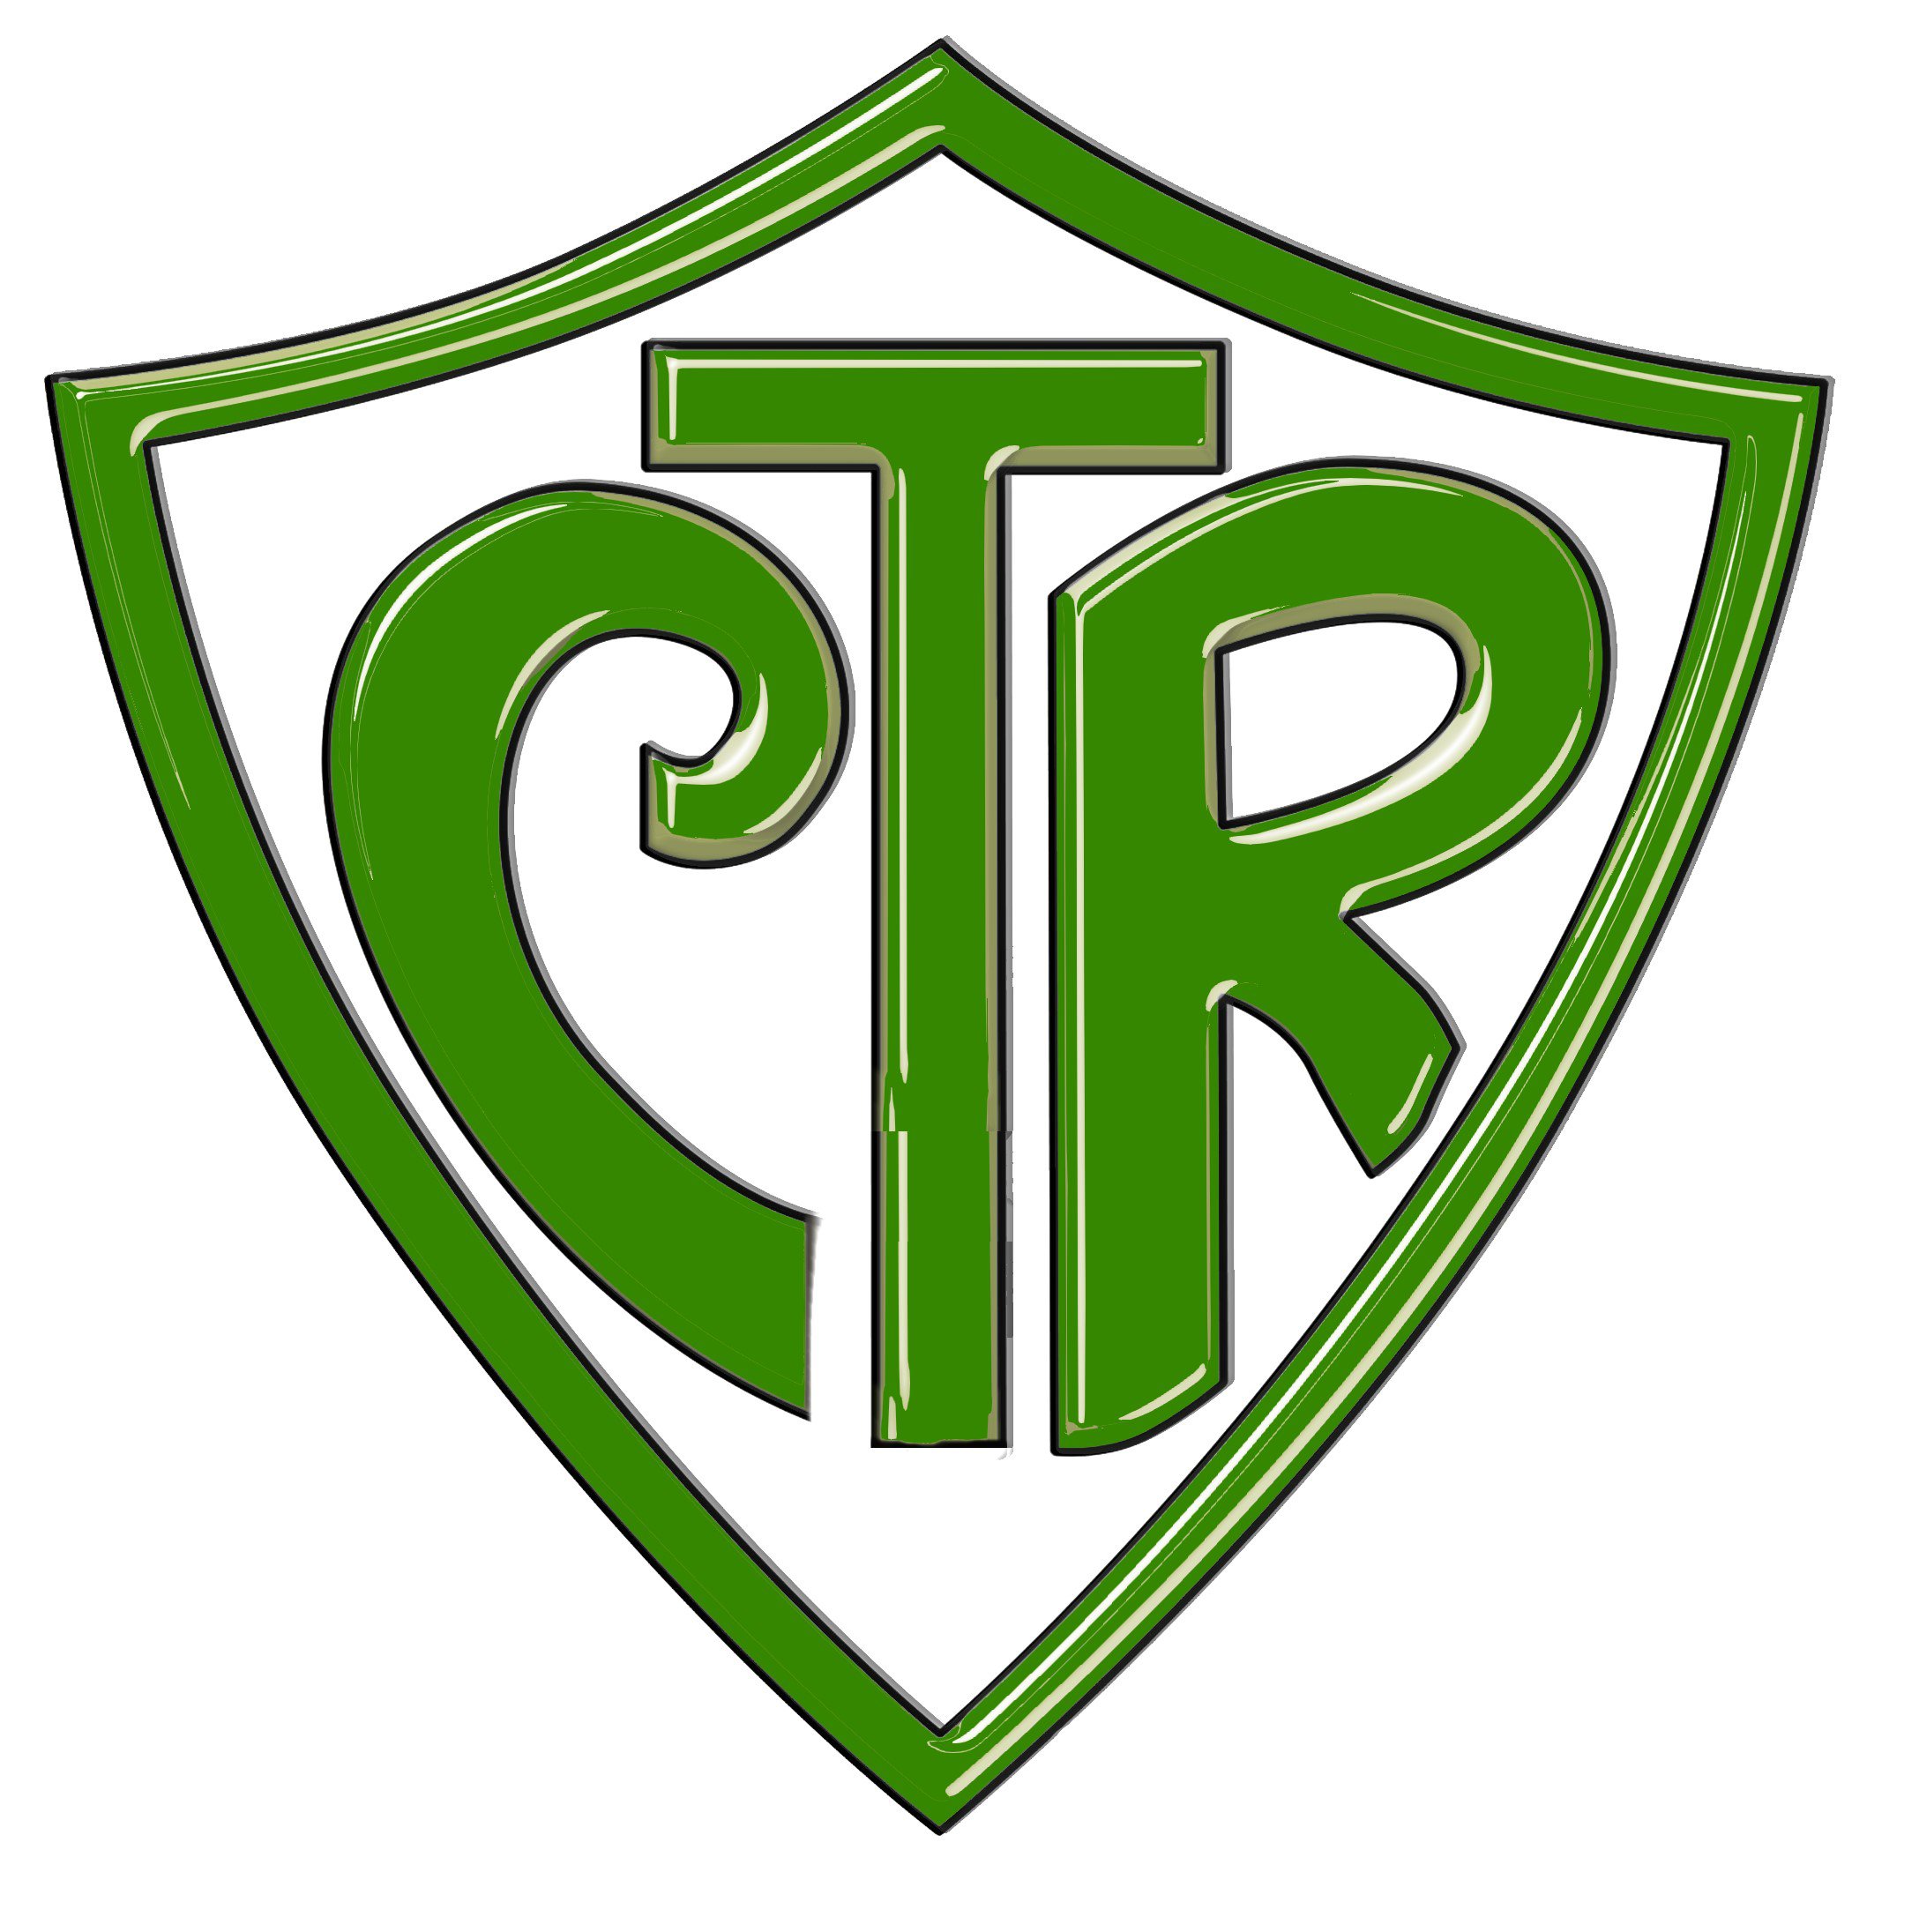 ... CTR Ring Shield Green ...